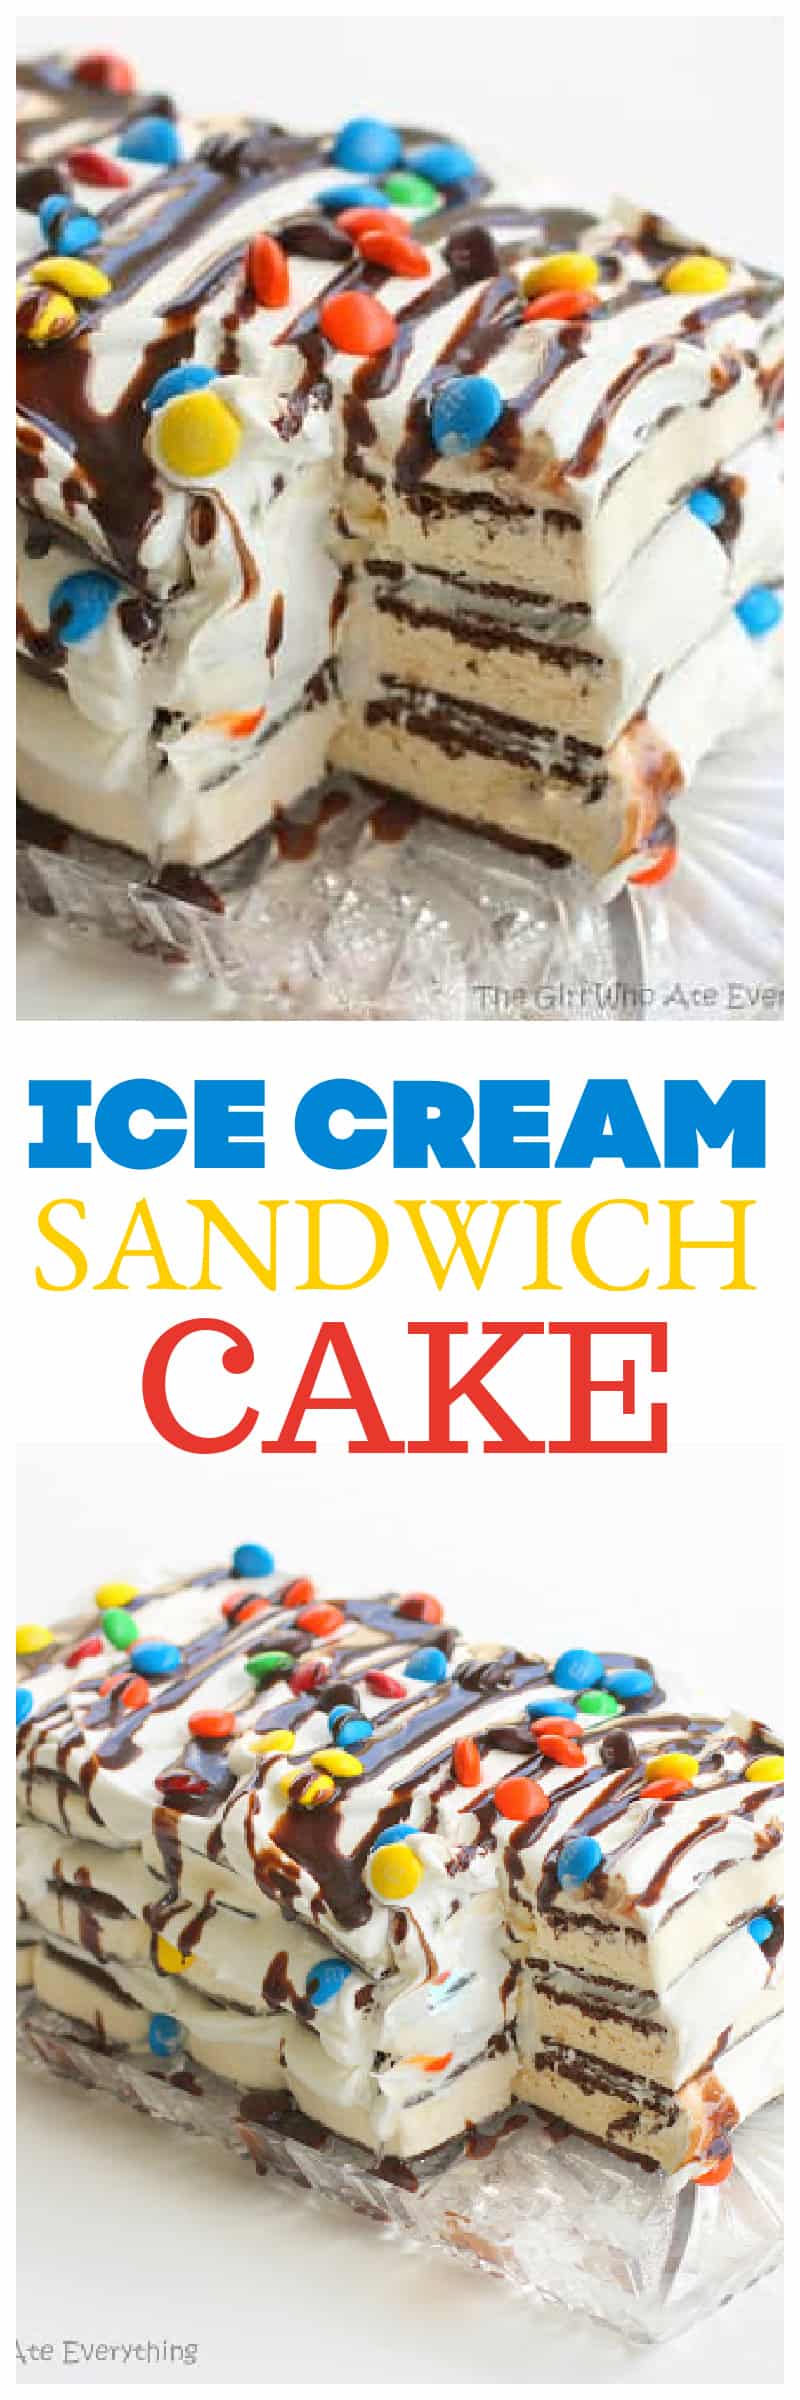 Ice Cream Sandwich Cake - My Baking Addiction